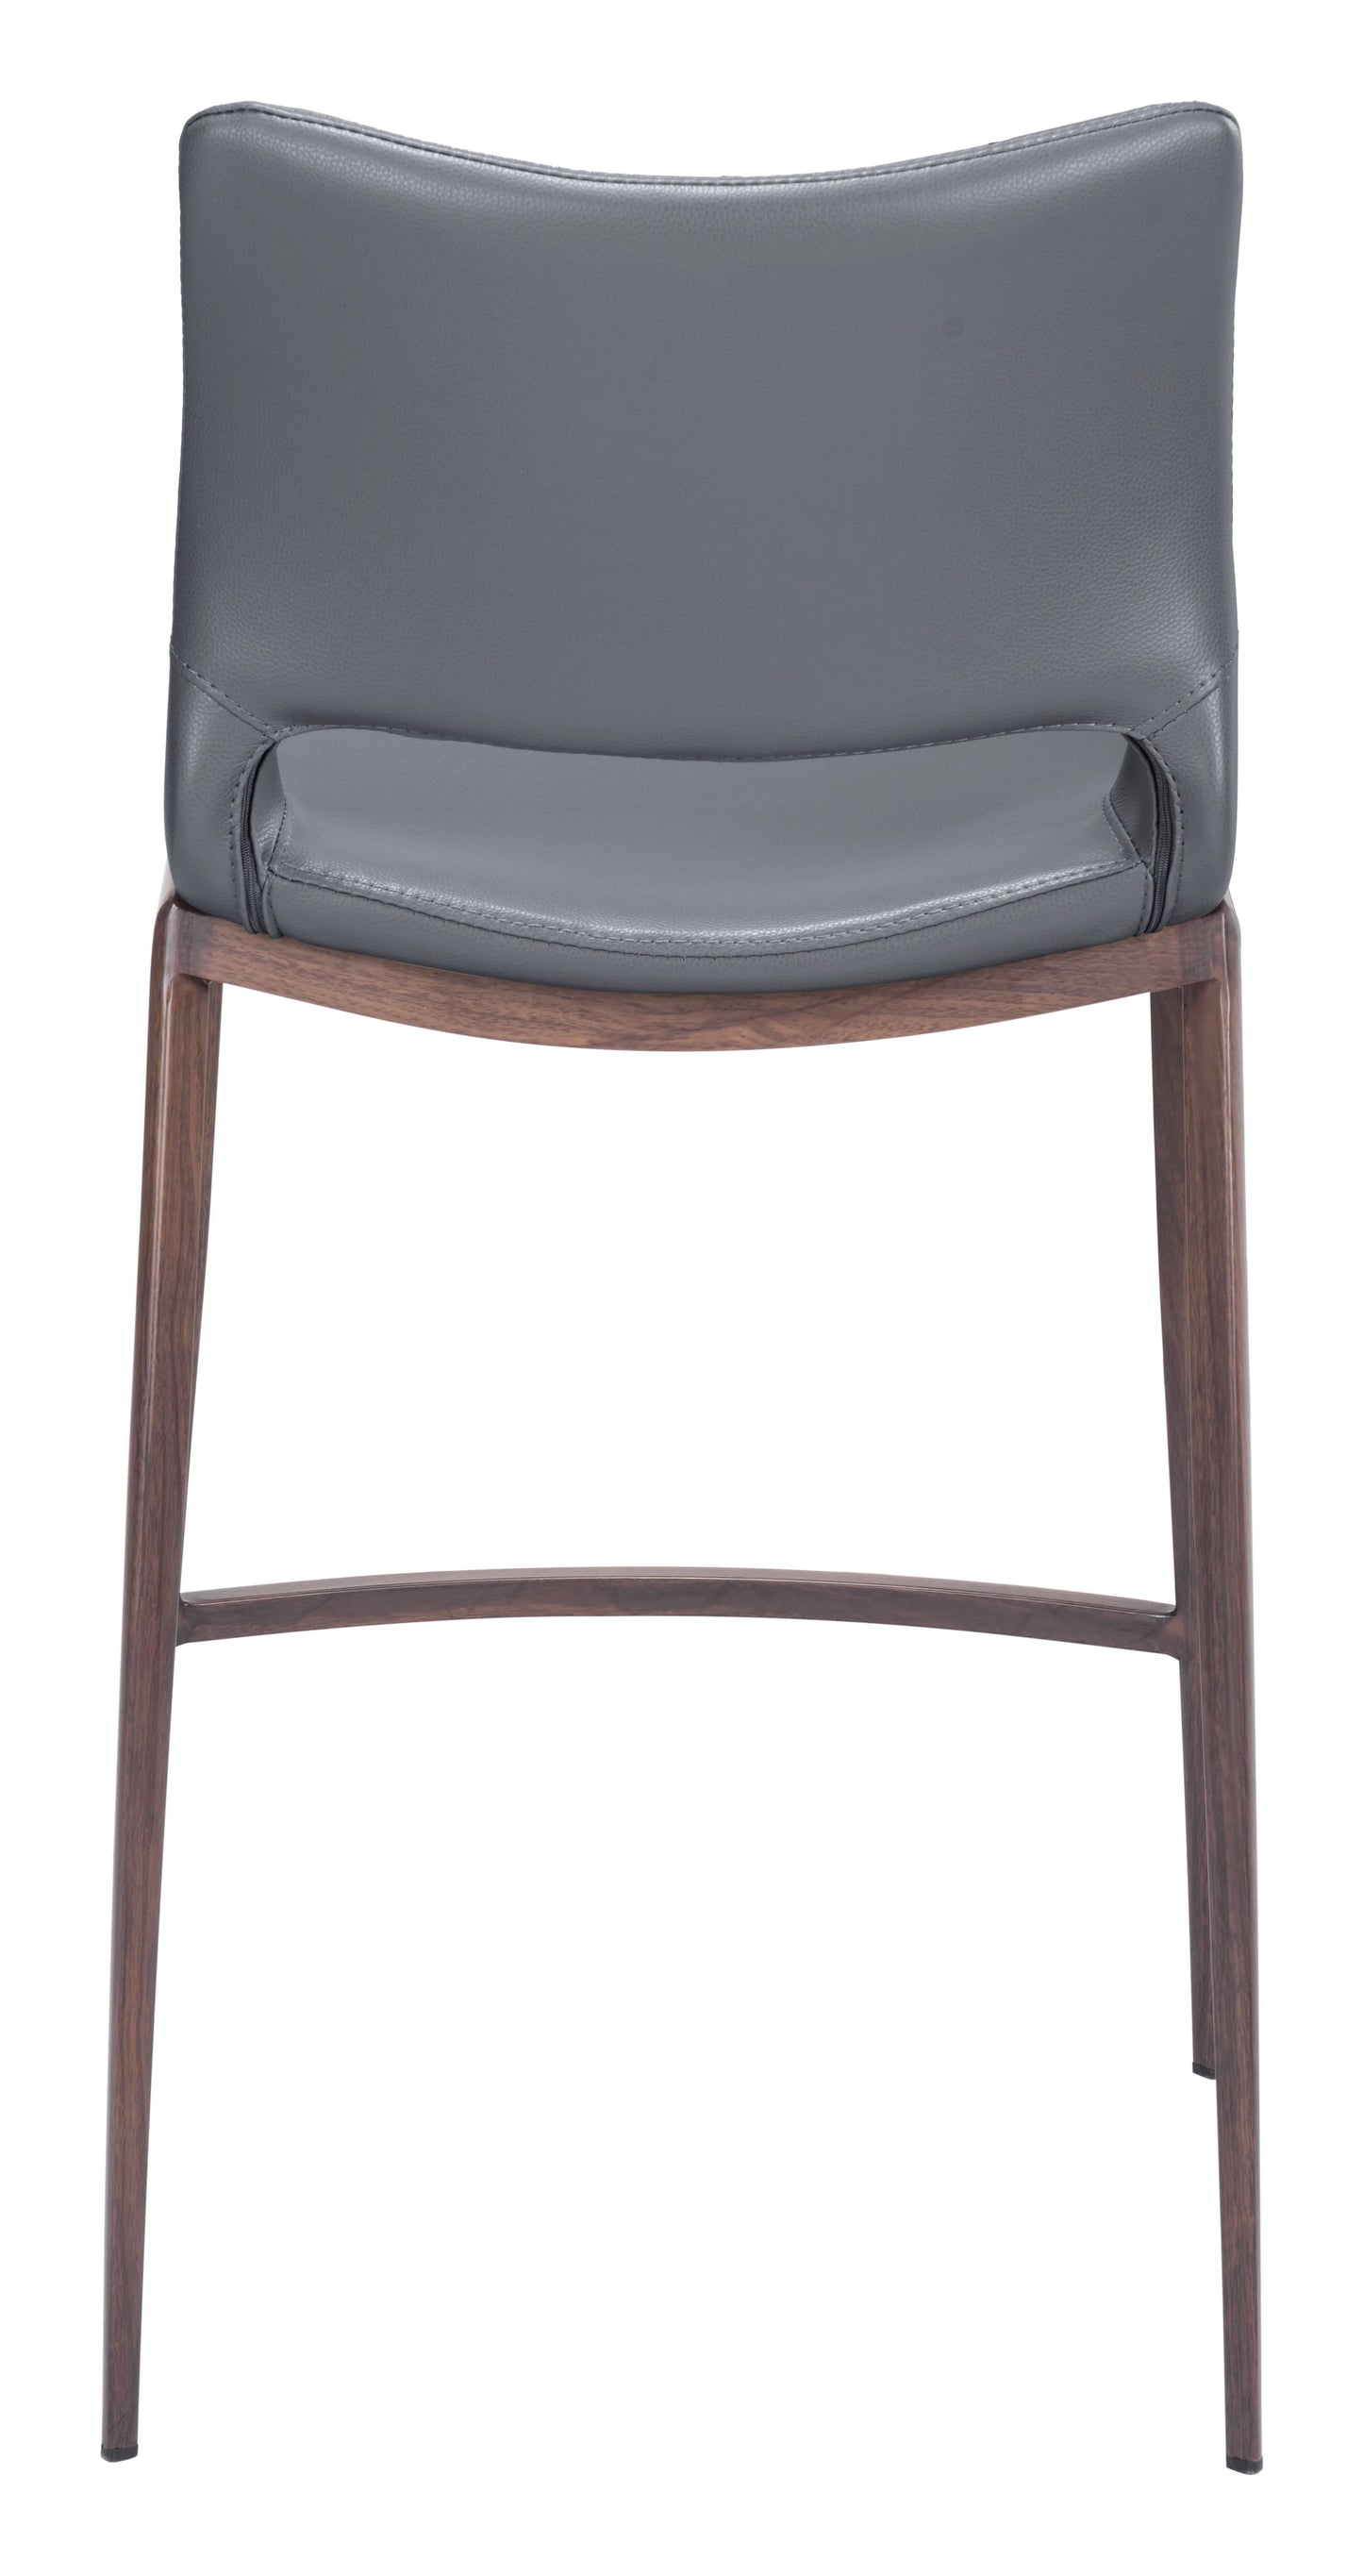 Back of stool